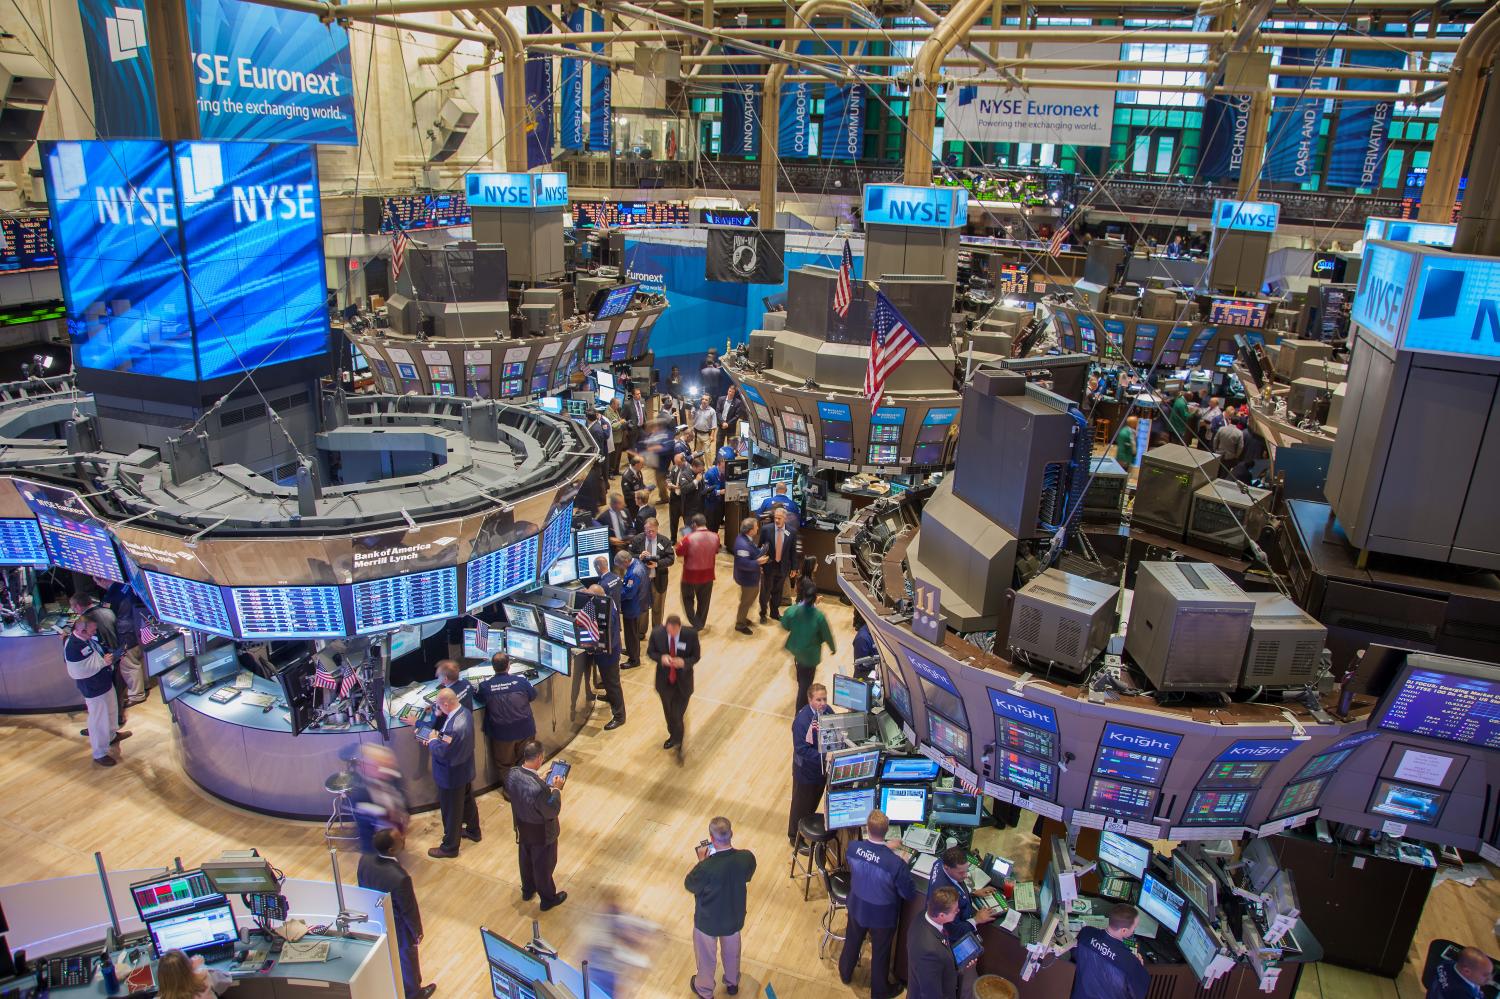 New York, New York, USA - Sept. 22, 2011 - Busy trading floor of the New York Stock Exchange